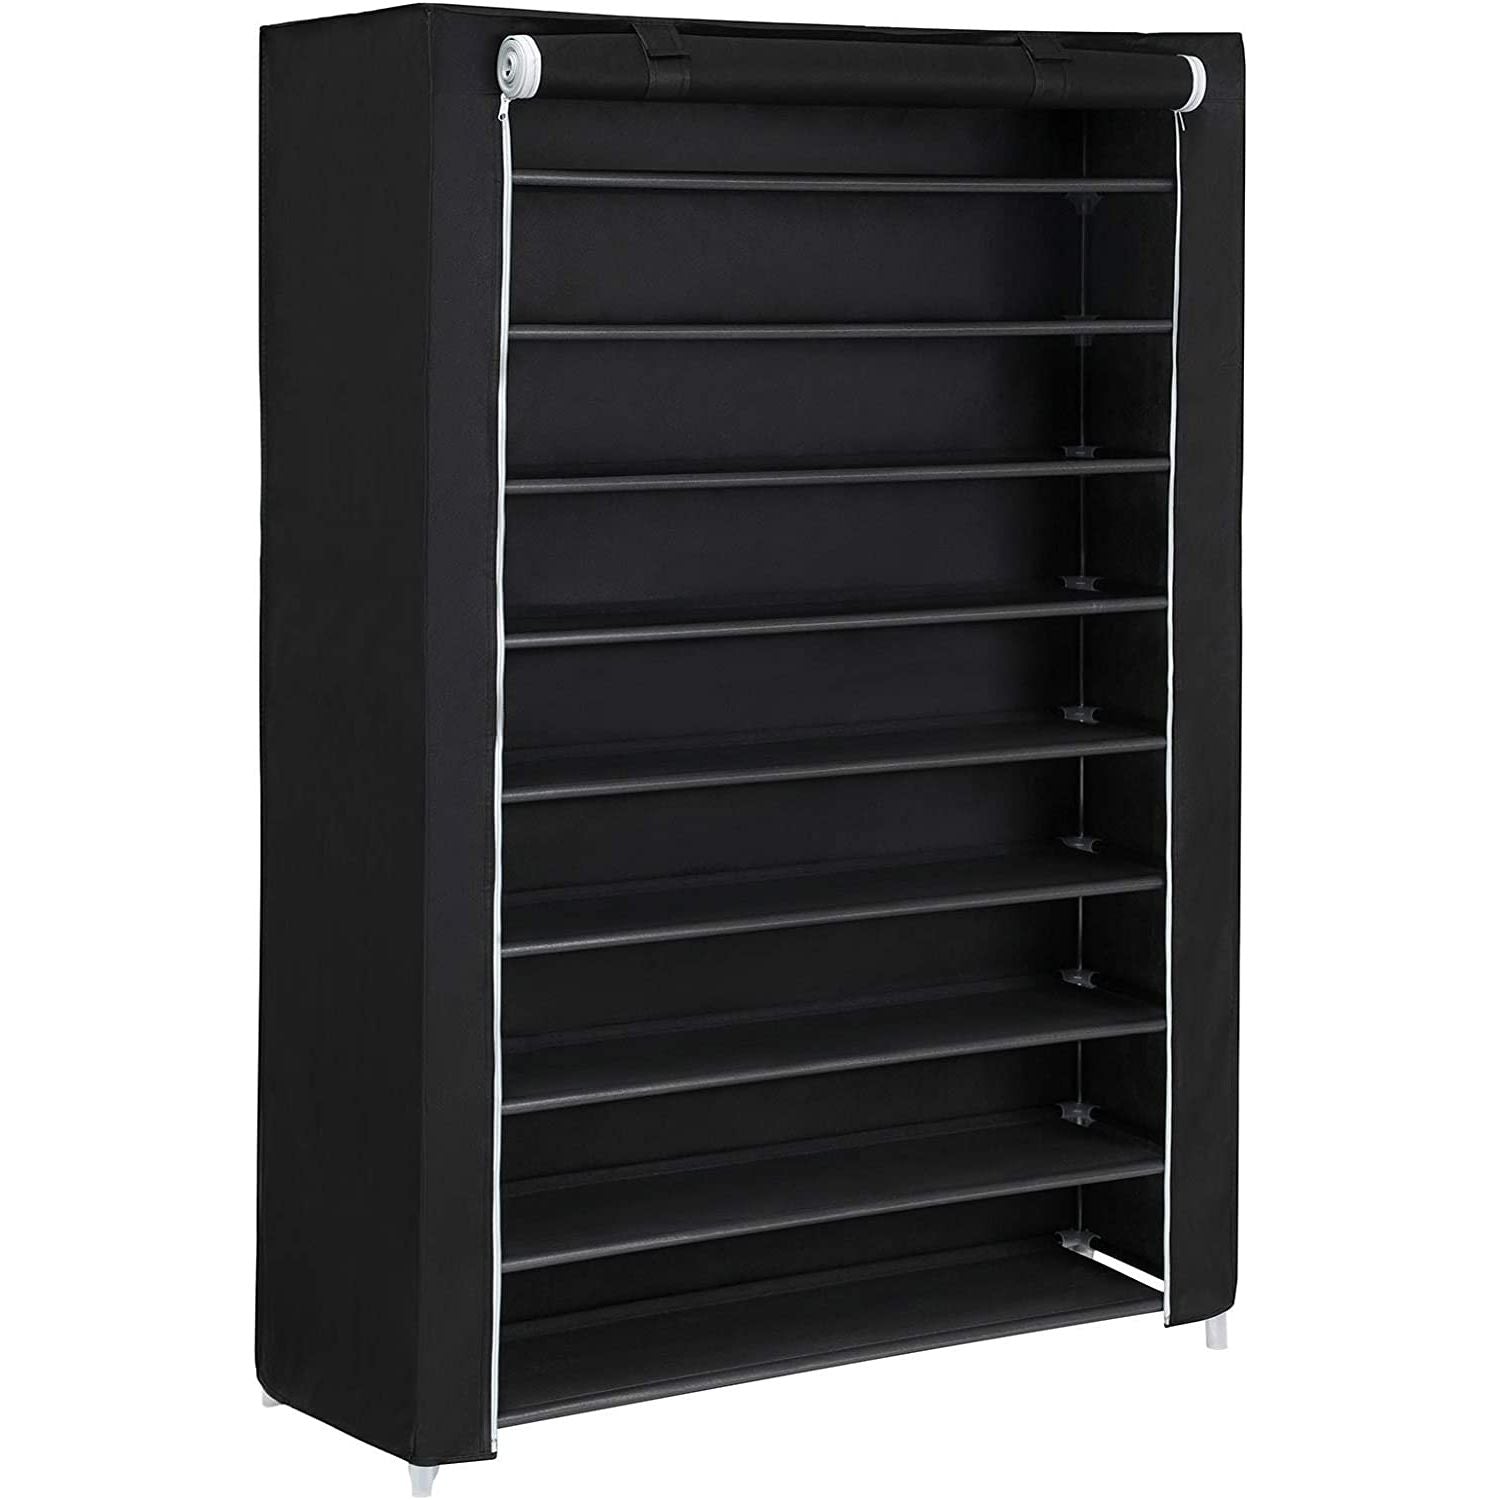 Shoe rack - Freestanding storage organizer - Black - 10